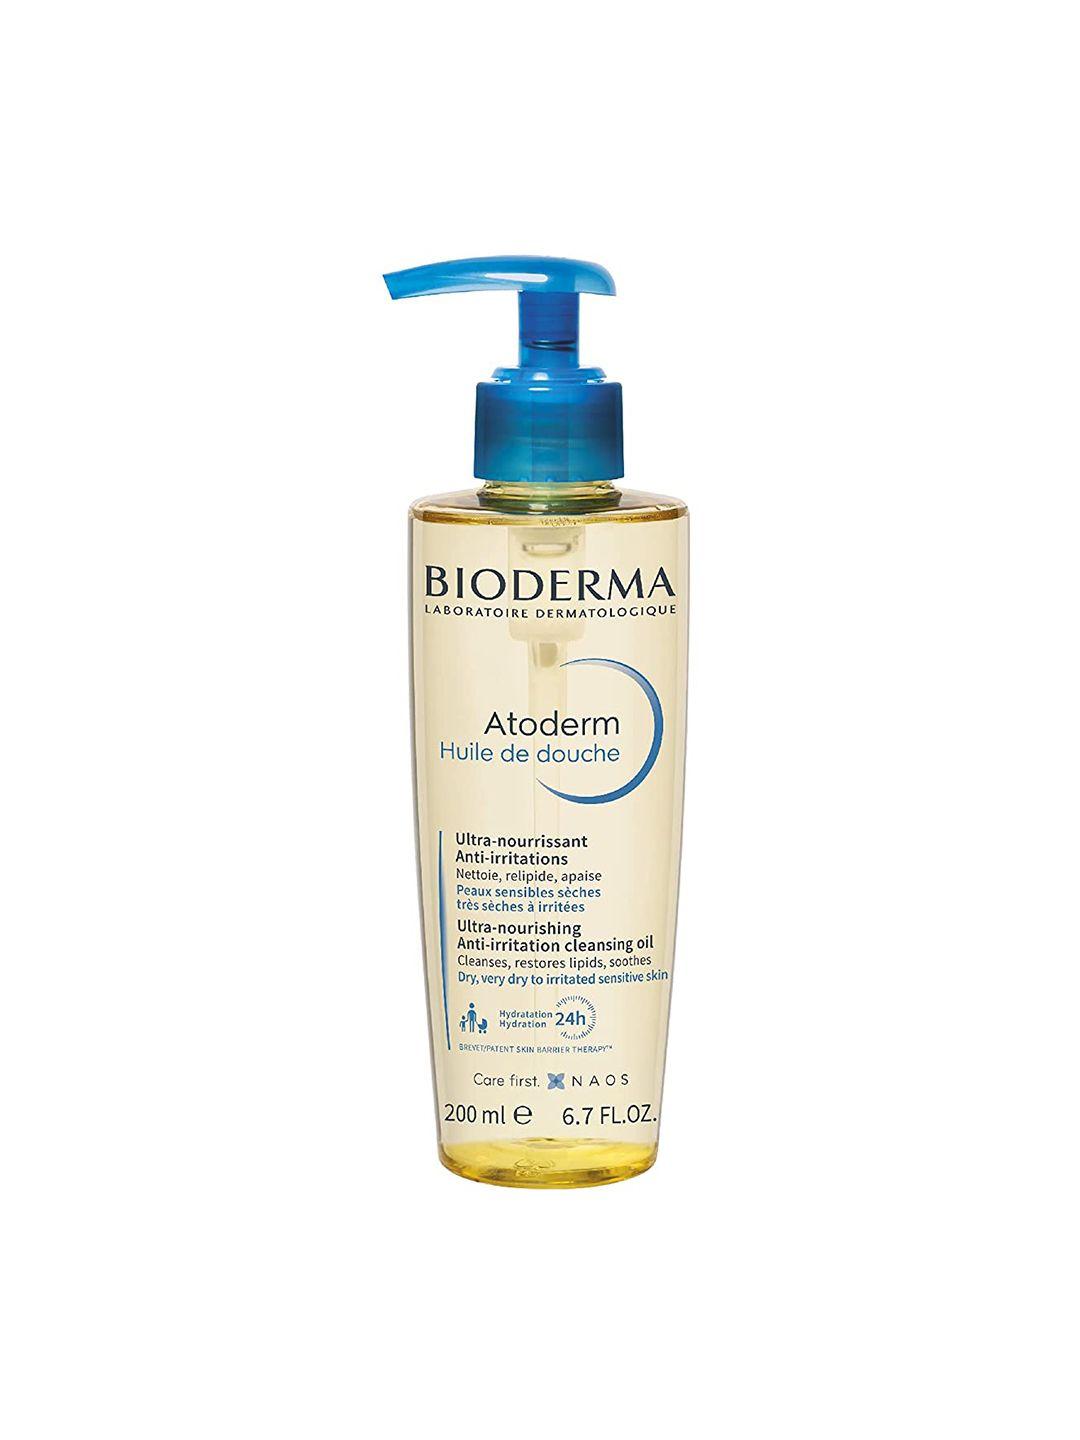 bioderma-atoderm-huile-de-douche-cleansing-oil---200ml